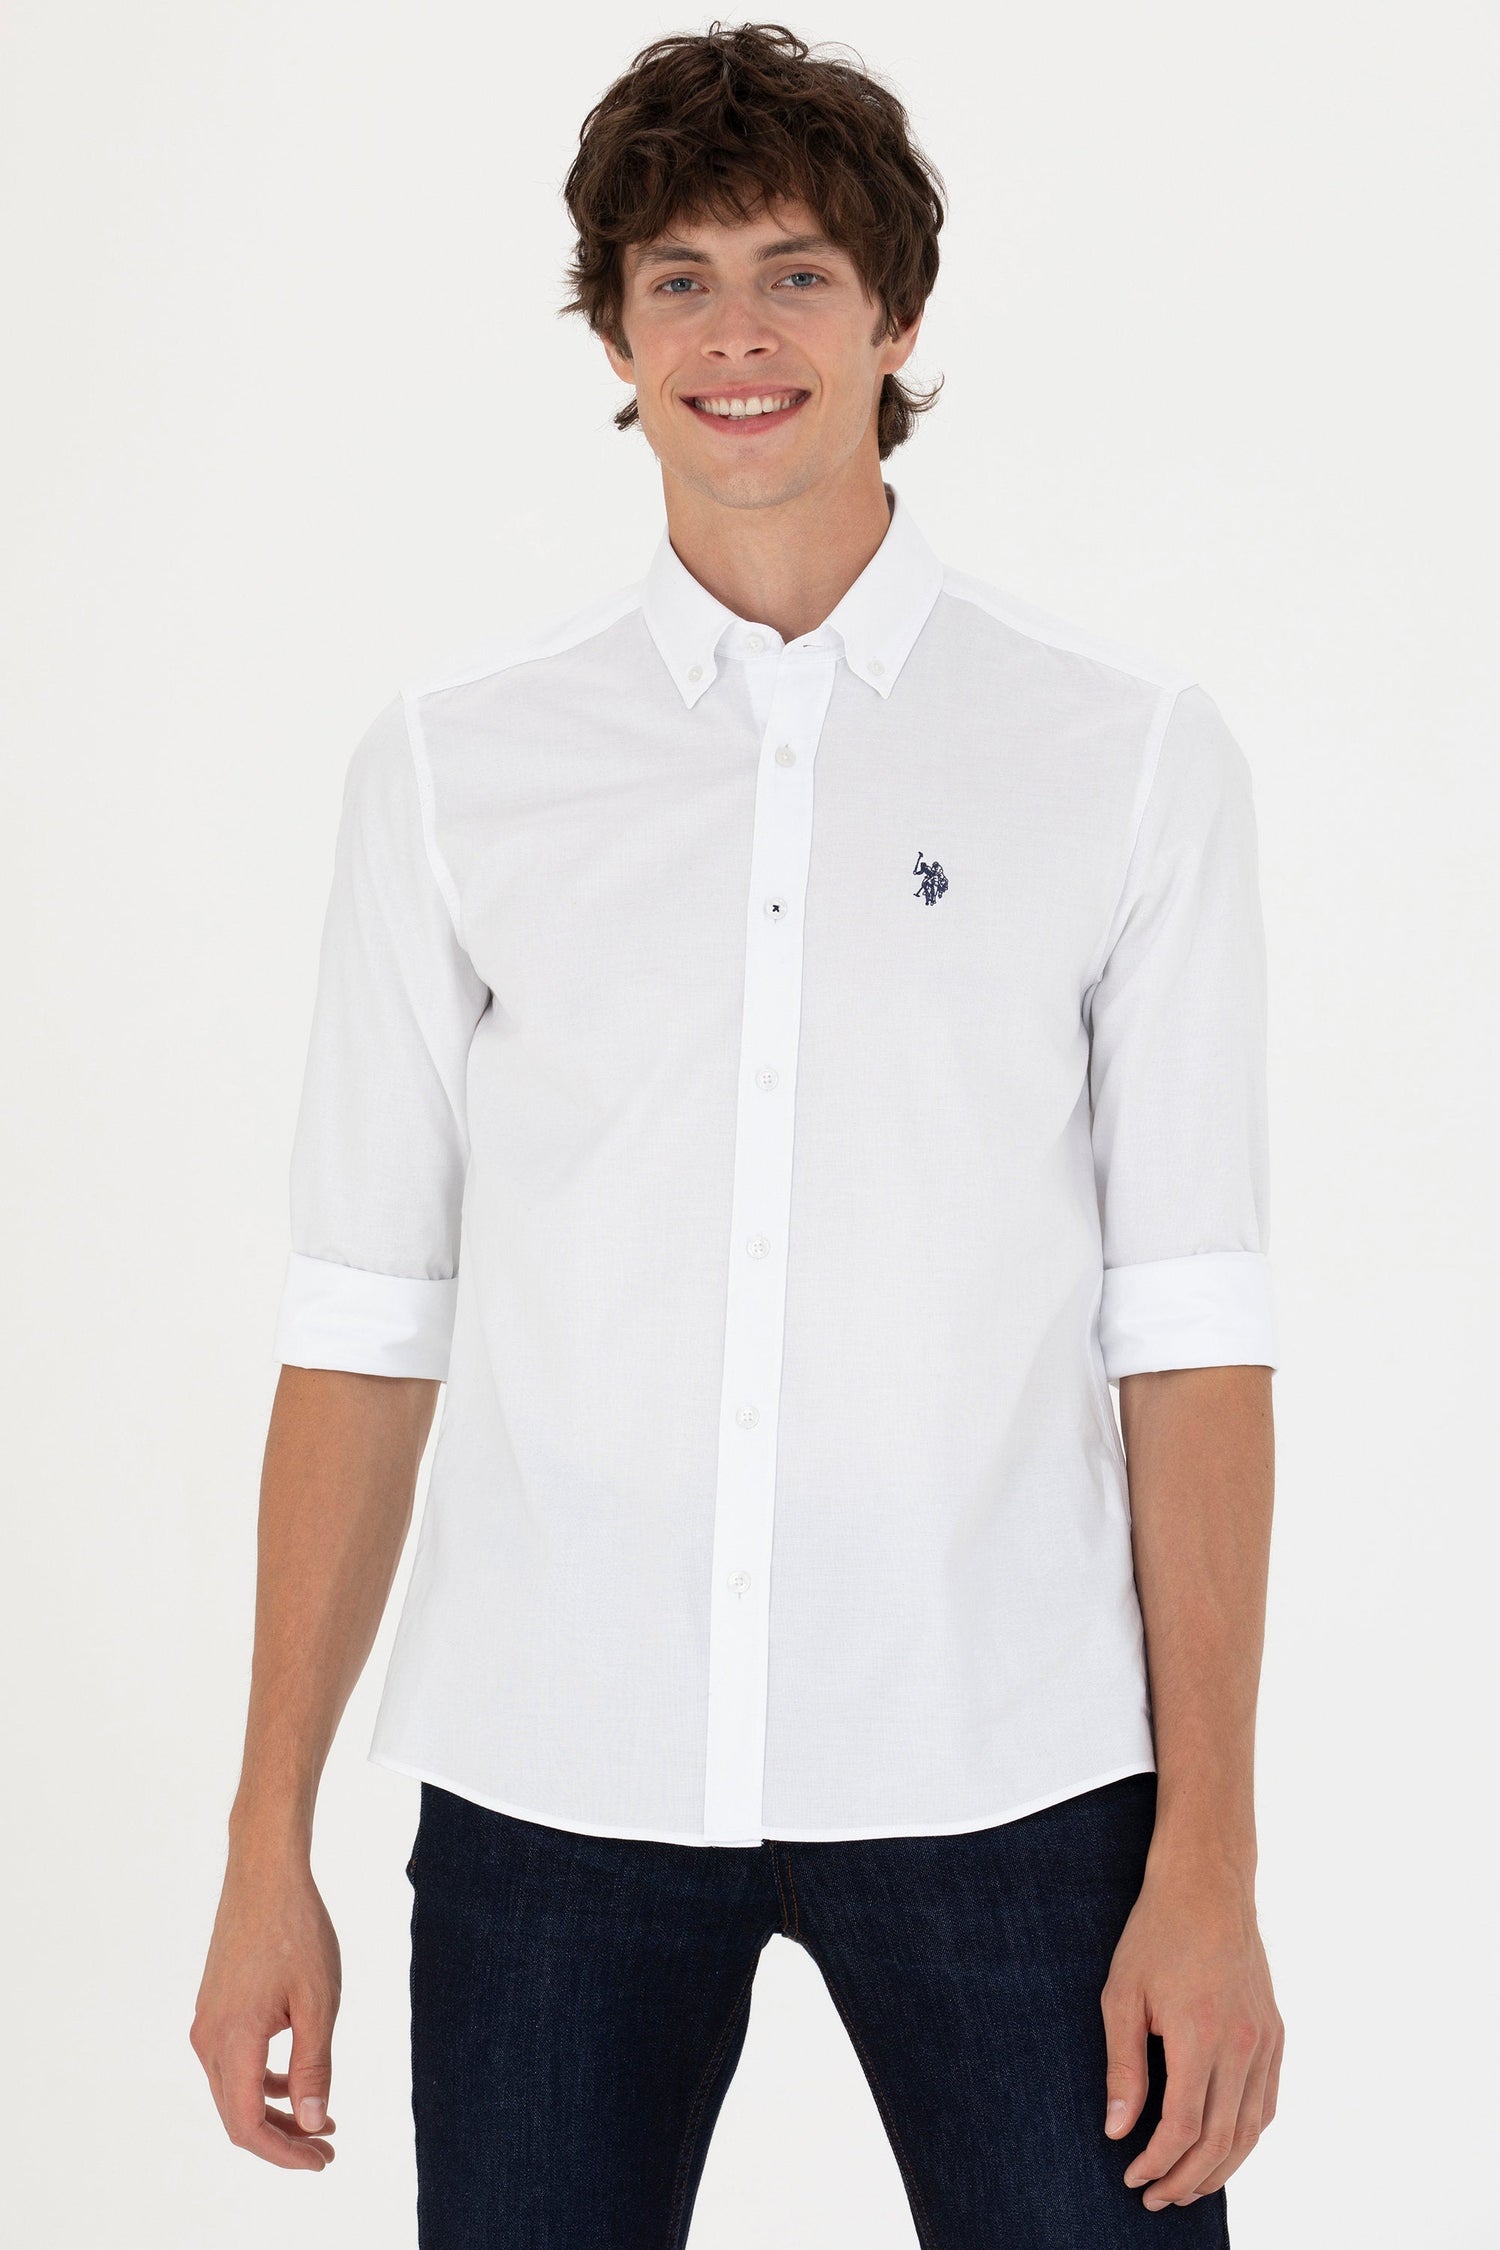 White Shirt With USPA Logo_G081SZ0040 1672487_VR013_05